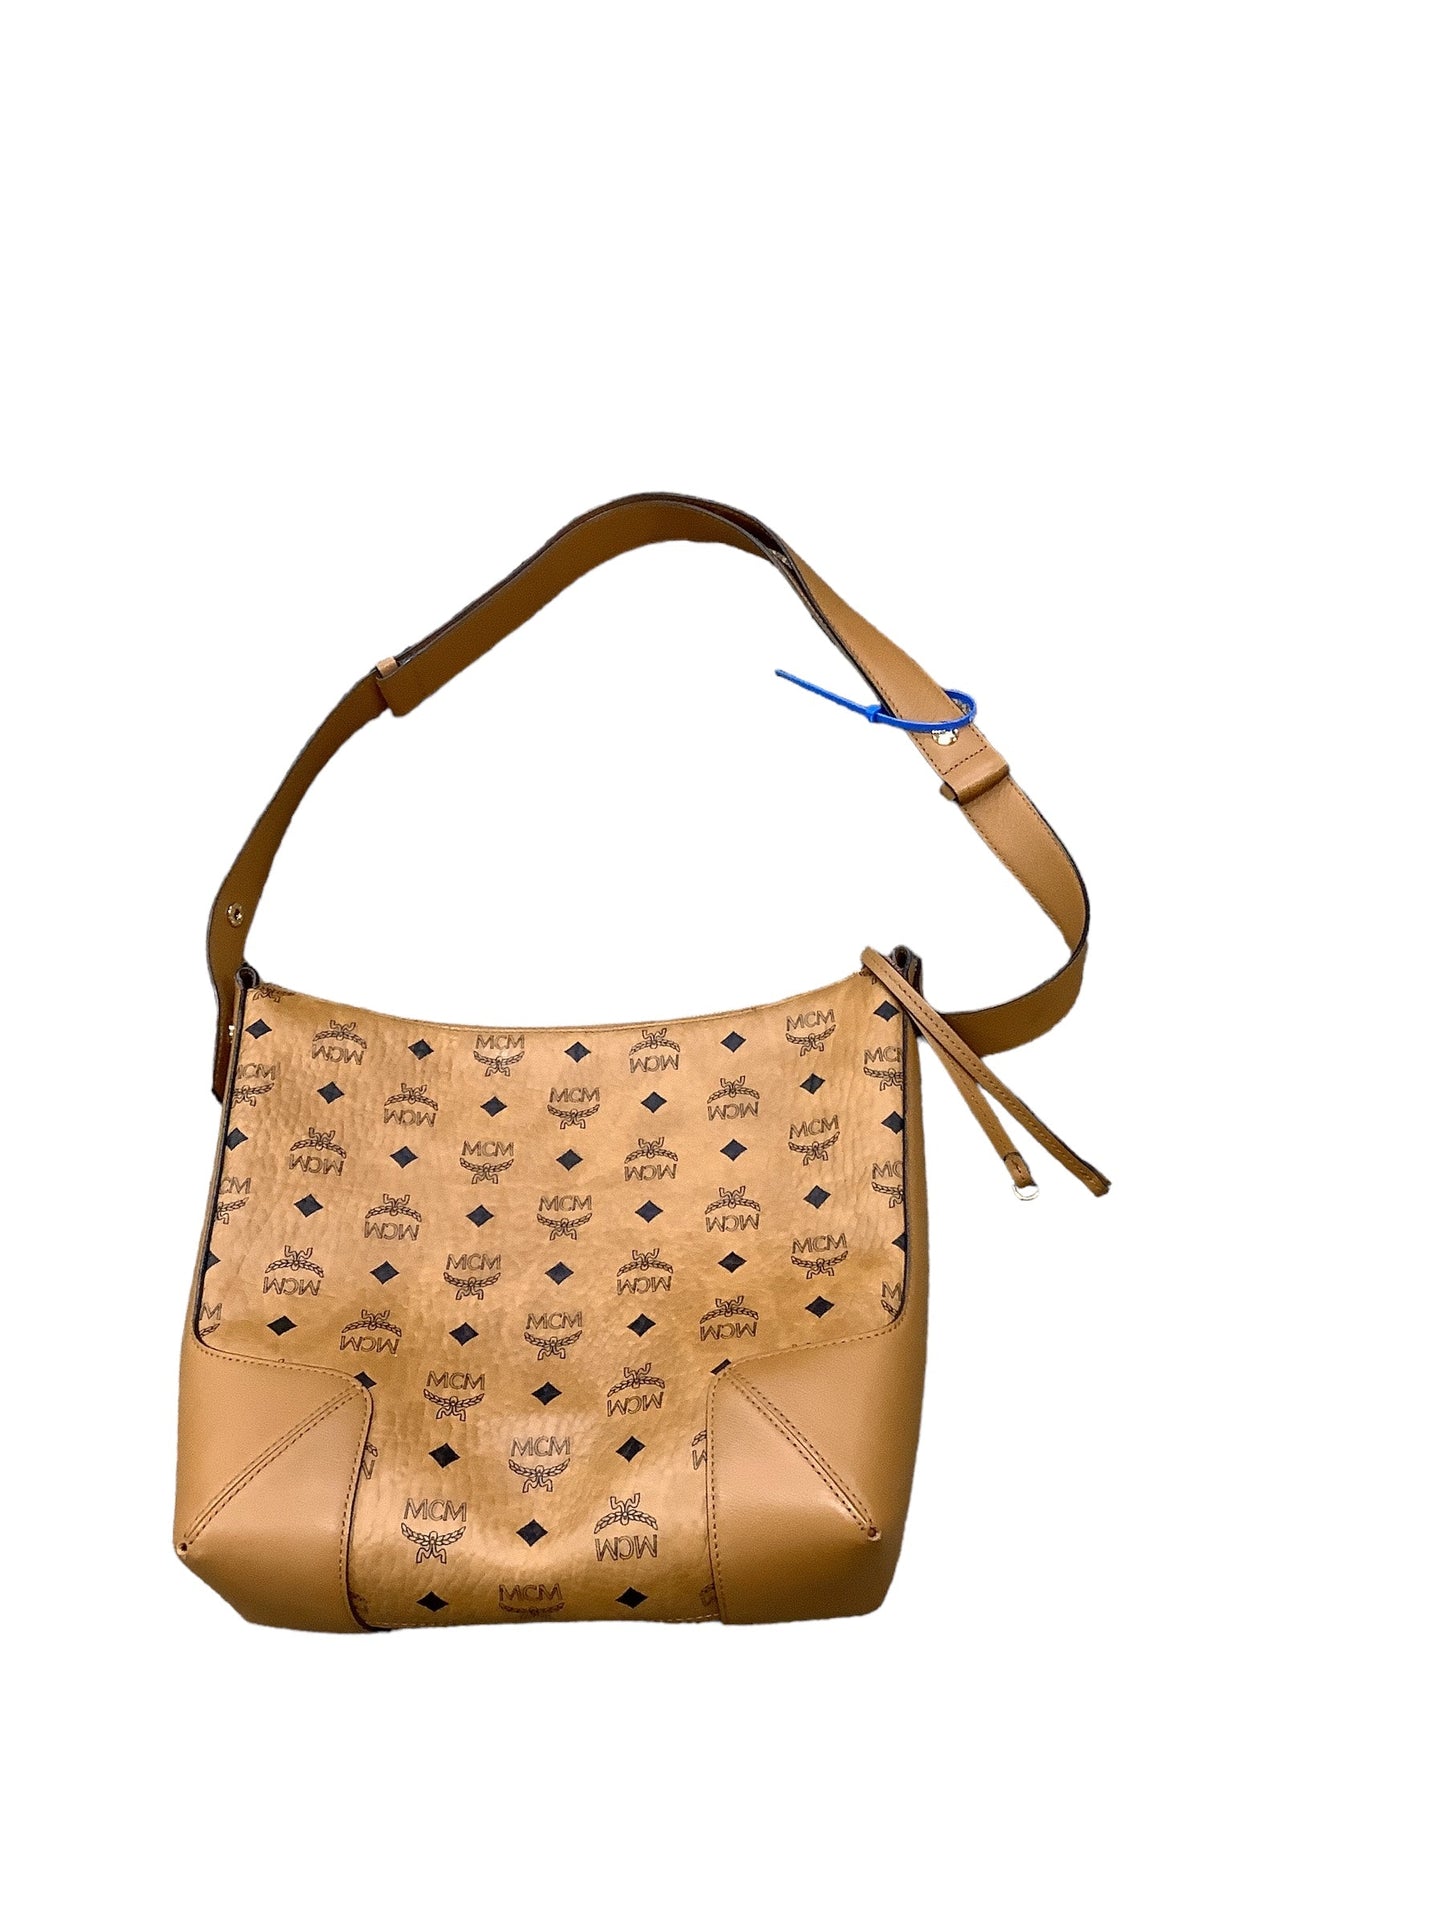 Handbag Luxury Designer Mcm, Size Medium